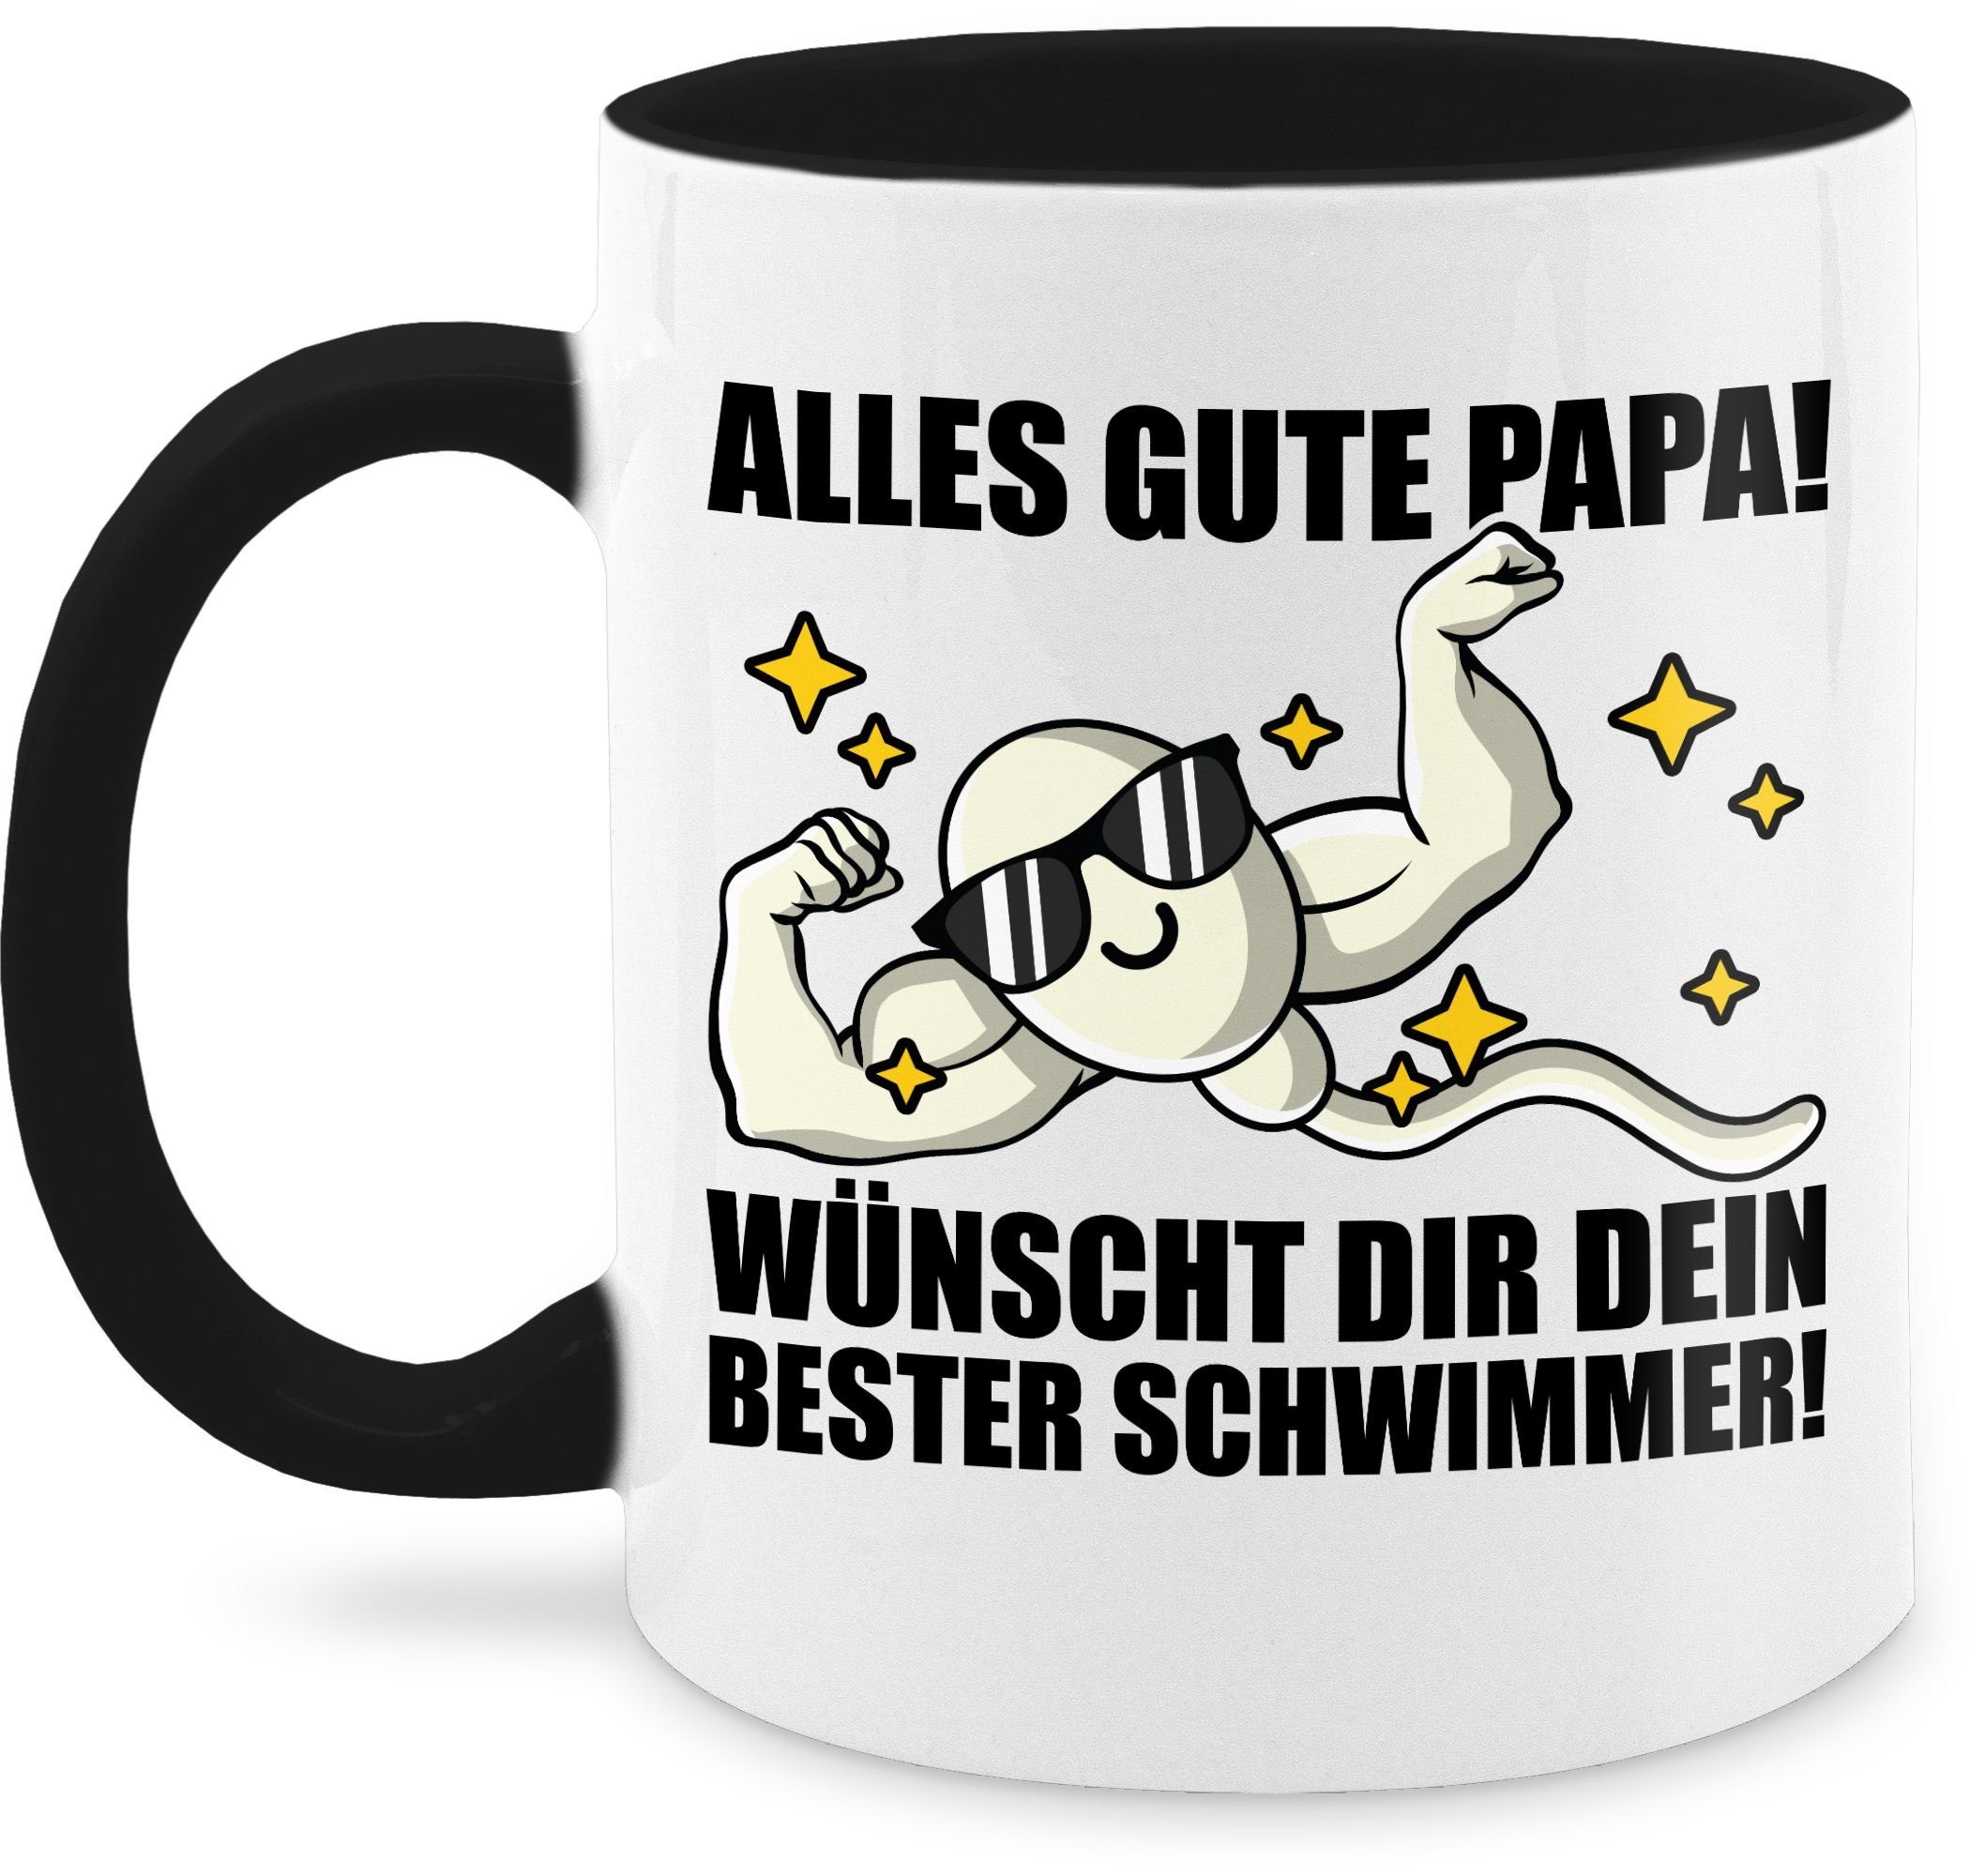 Papa! - Schwarz schwarz, dir Vatertag bester Alles Tasse Schwimmer Shirtracer Wünscht 1 Gute Keramik, Kaffeetasse Geschenk dein